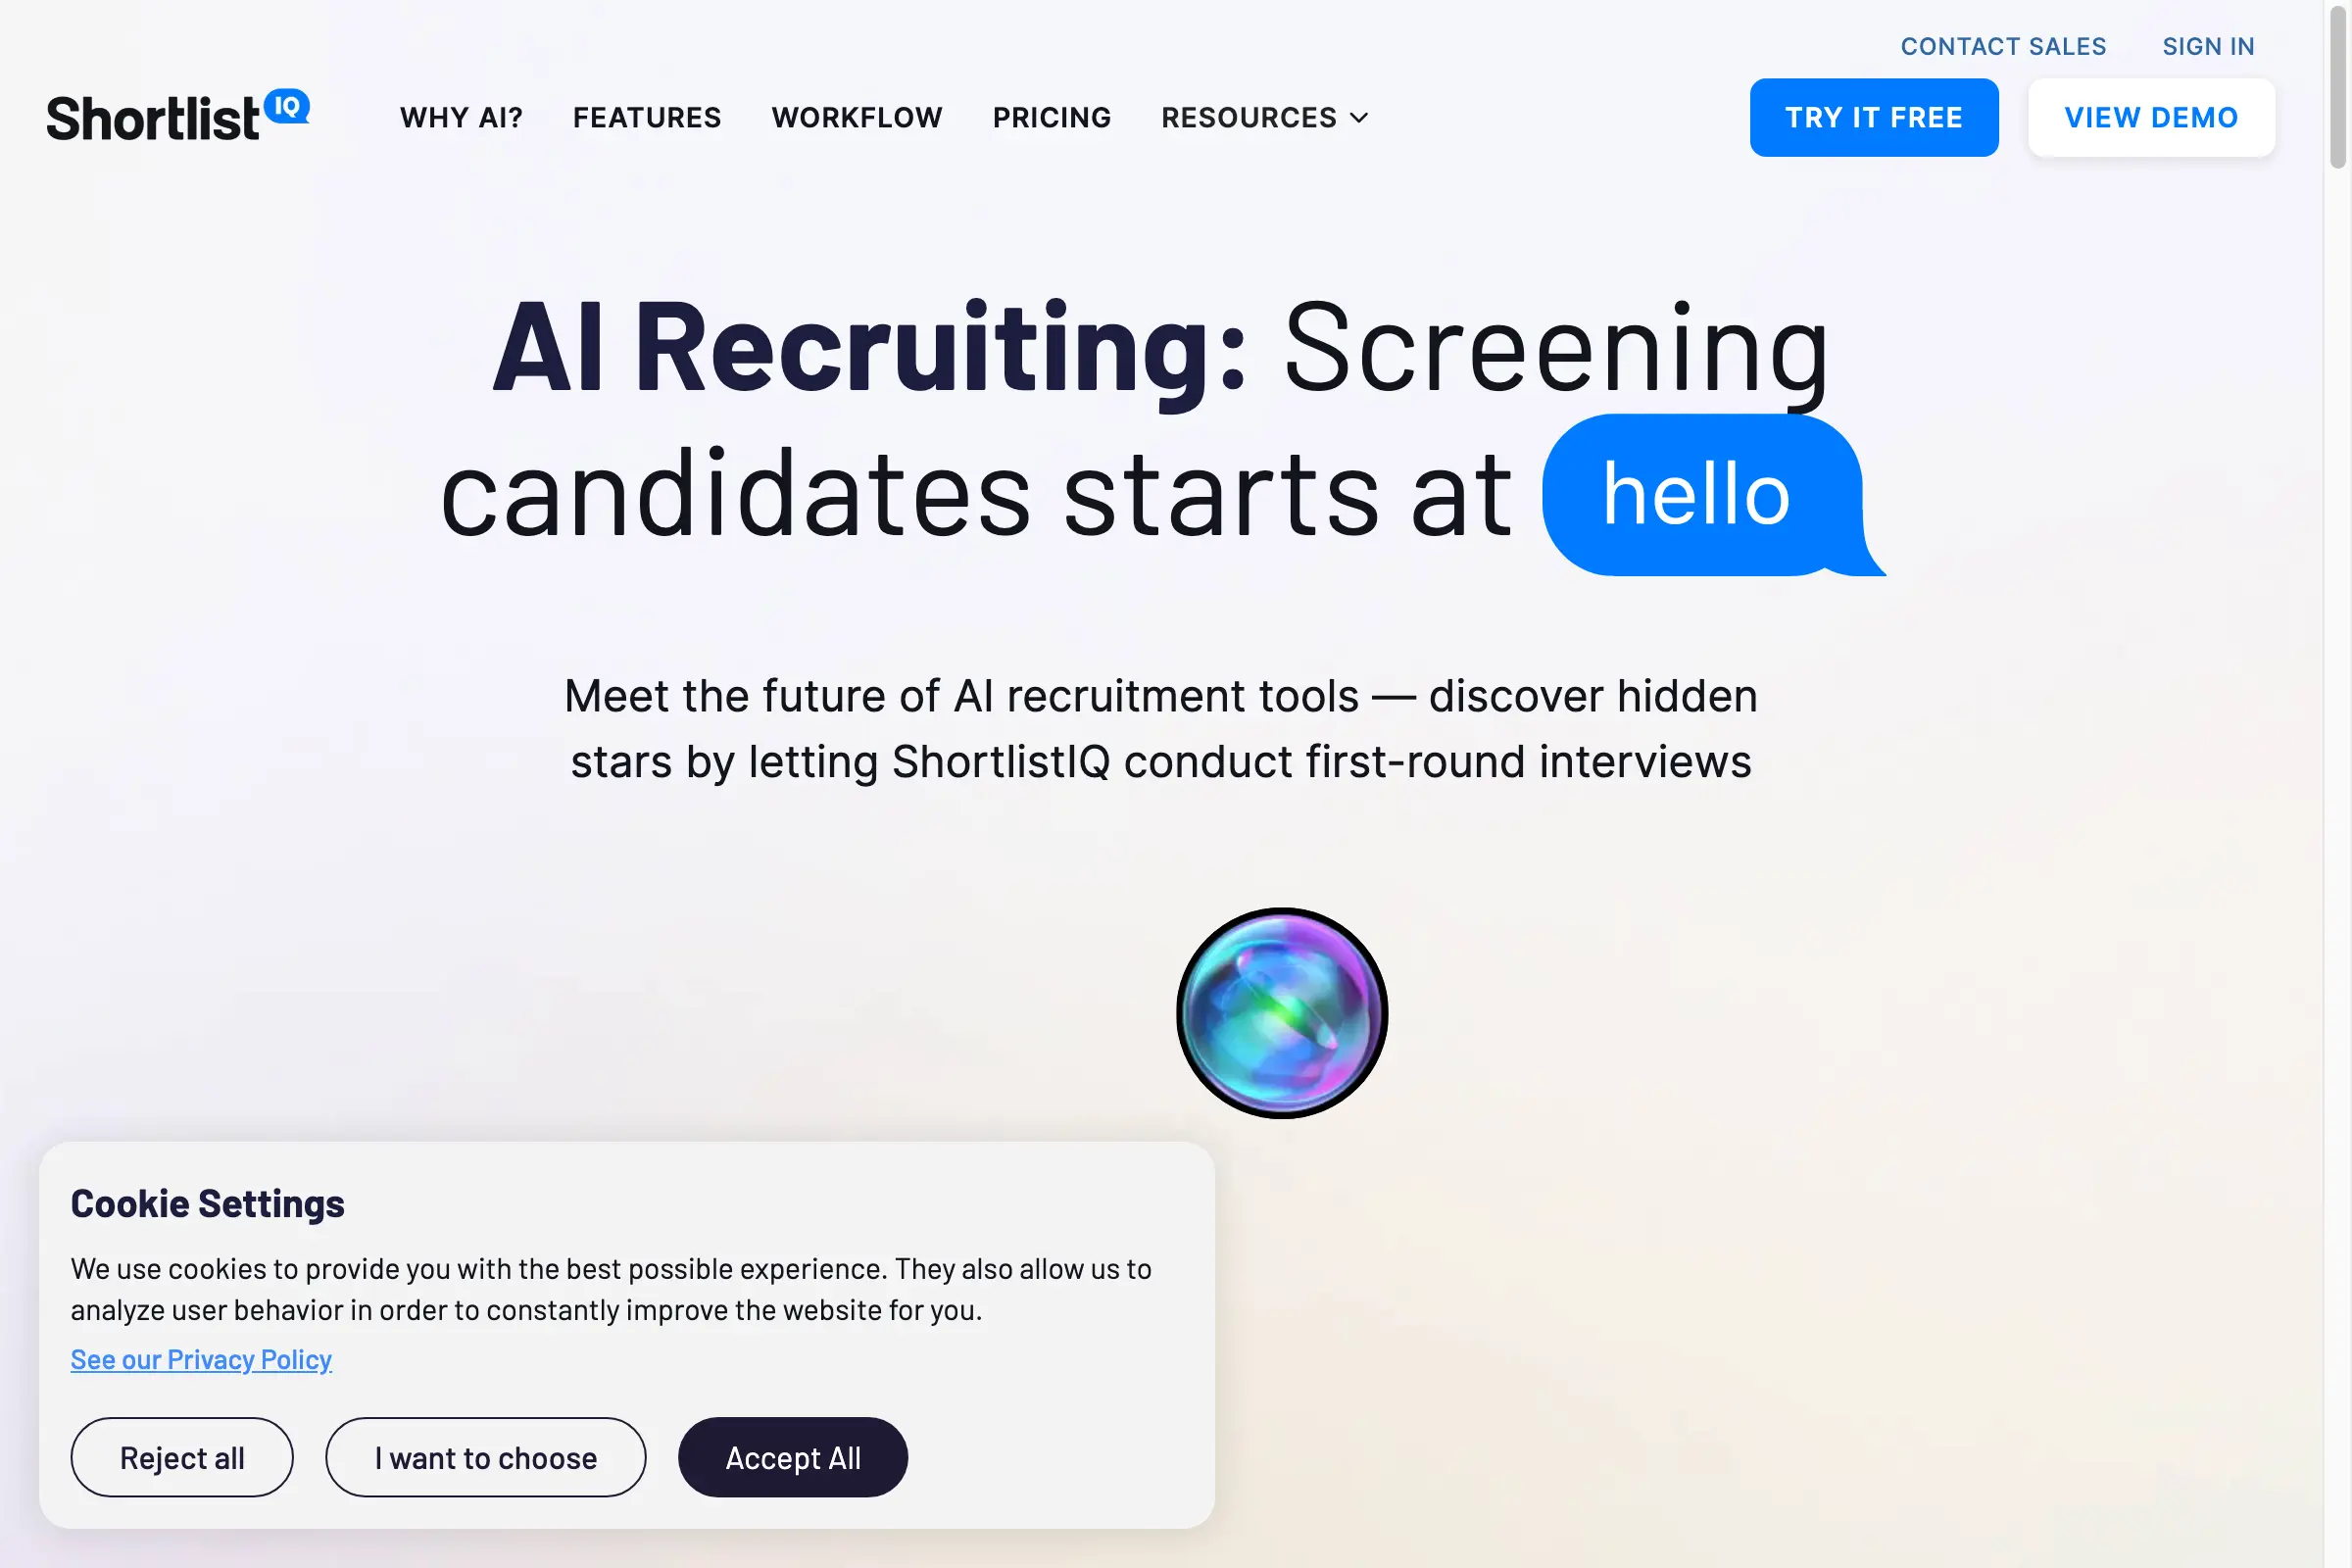 ShortlistIQ: AI Recruiting Tool